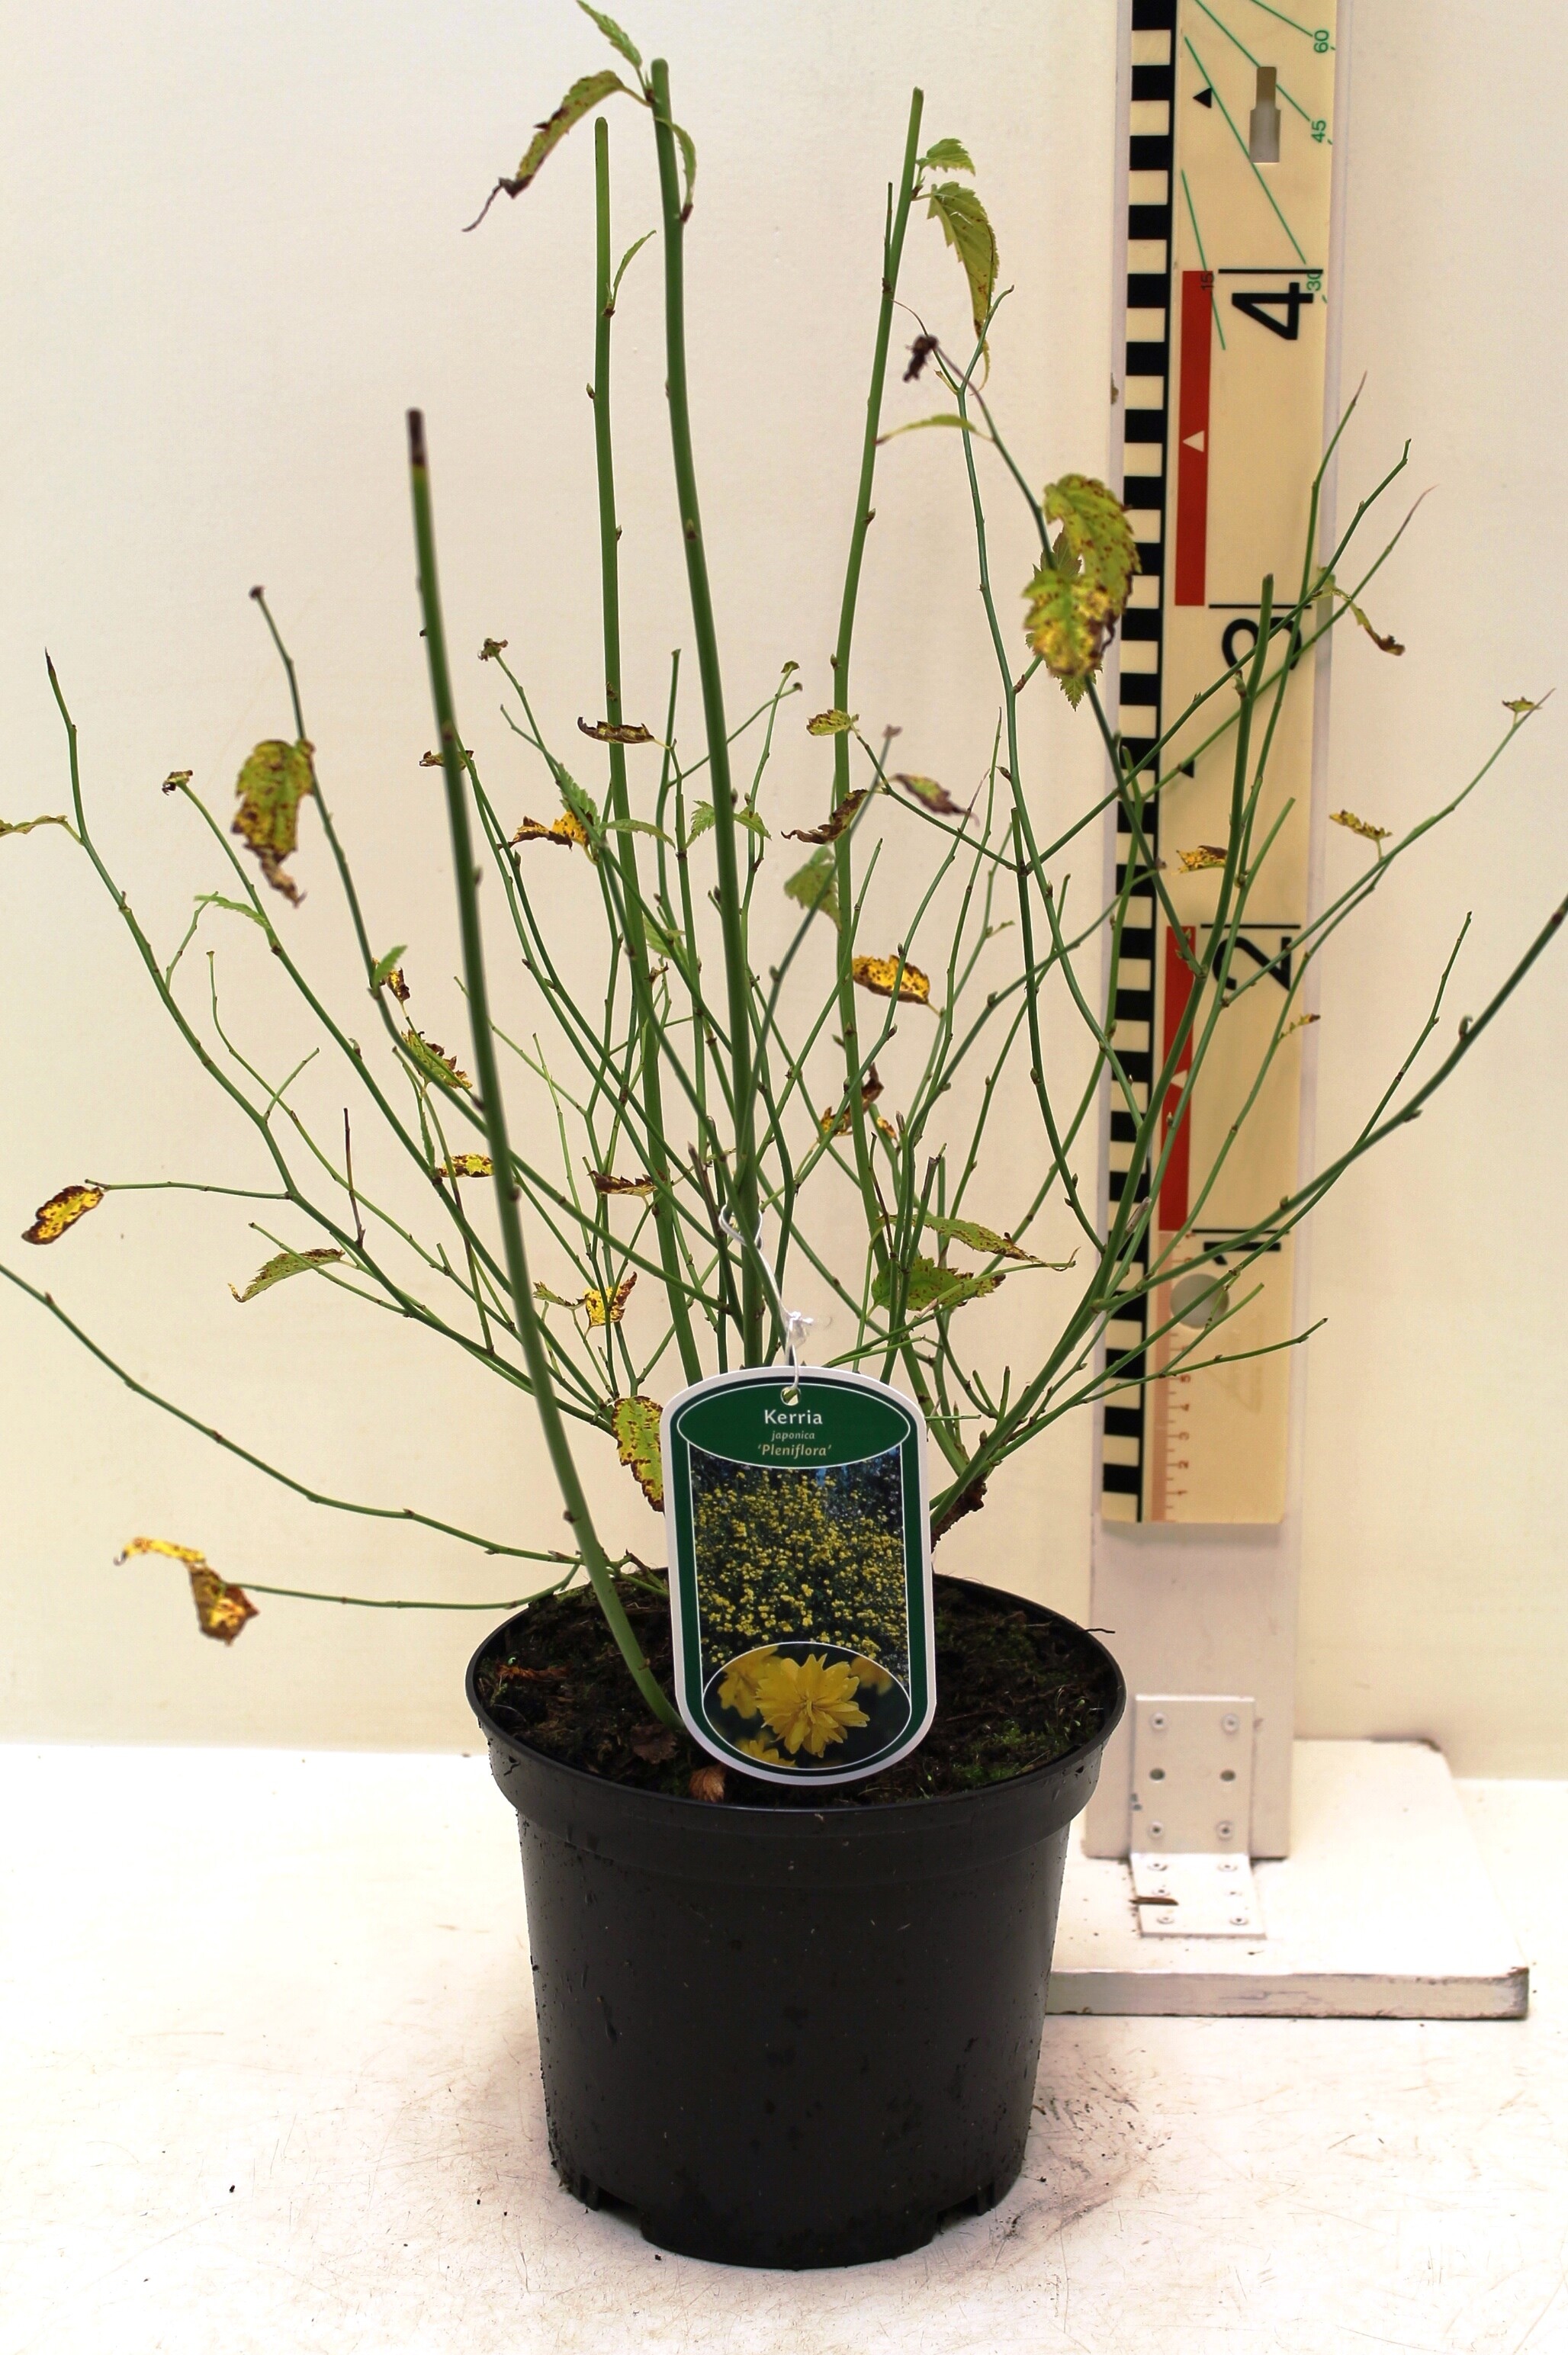 kerria japonica 'Pleniflora'c3